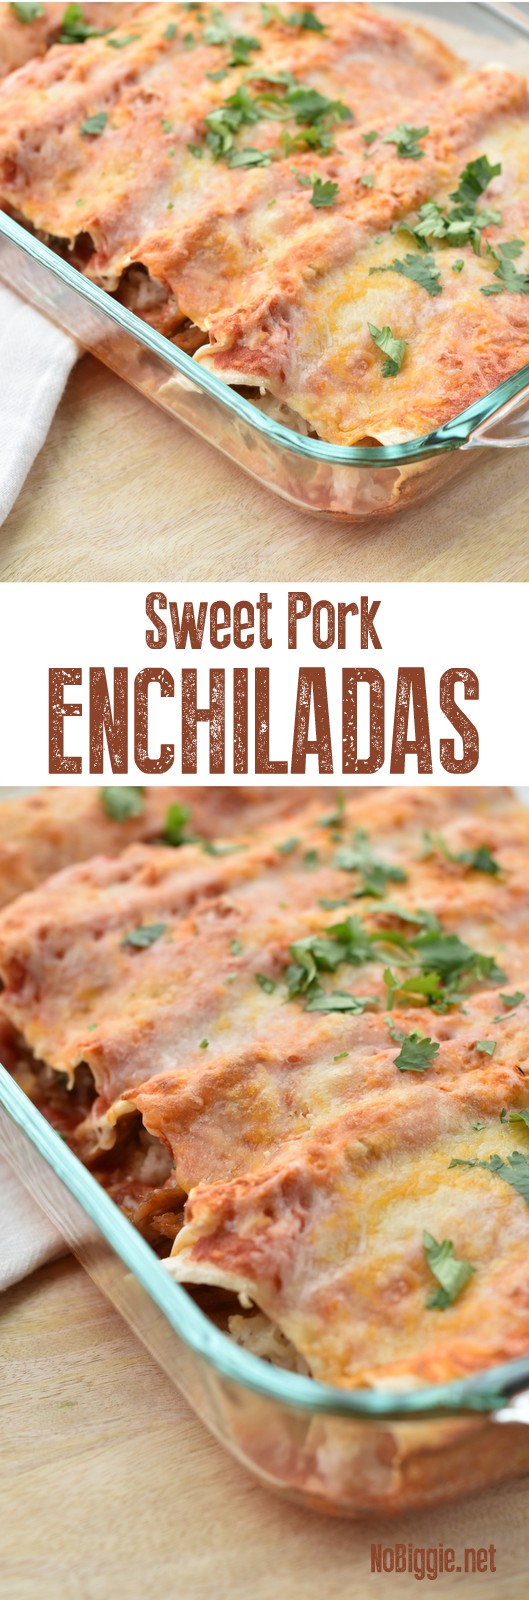 Crock Pot Sweet Pork Enchiladas | NoBiggie.net